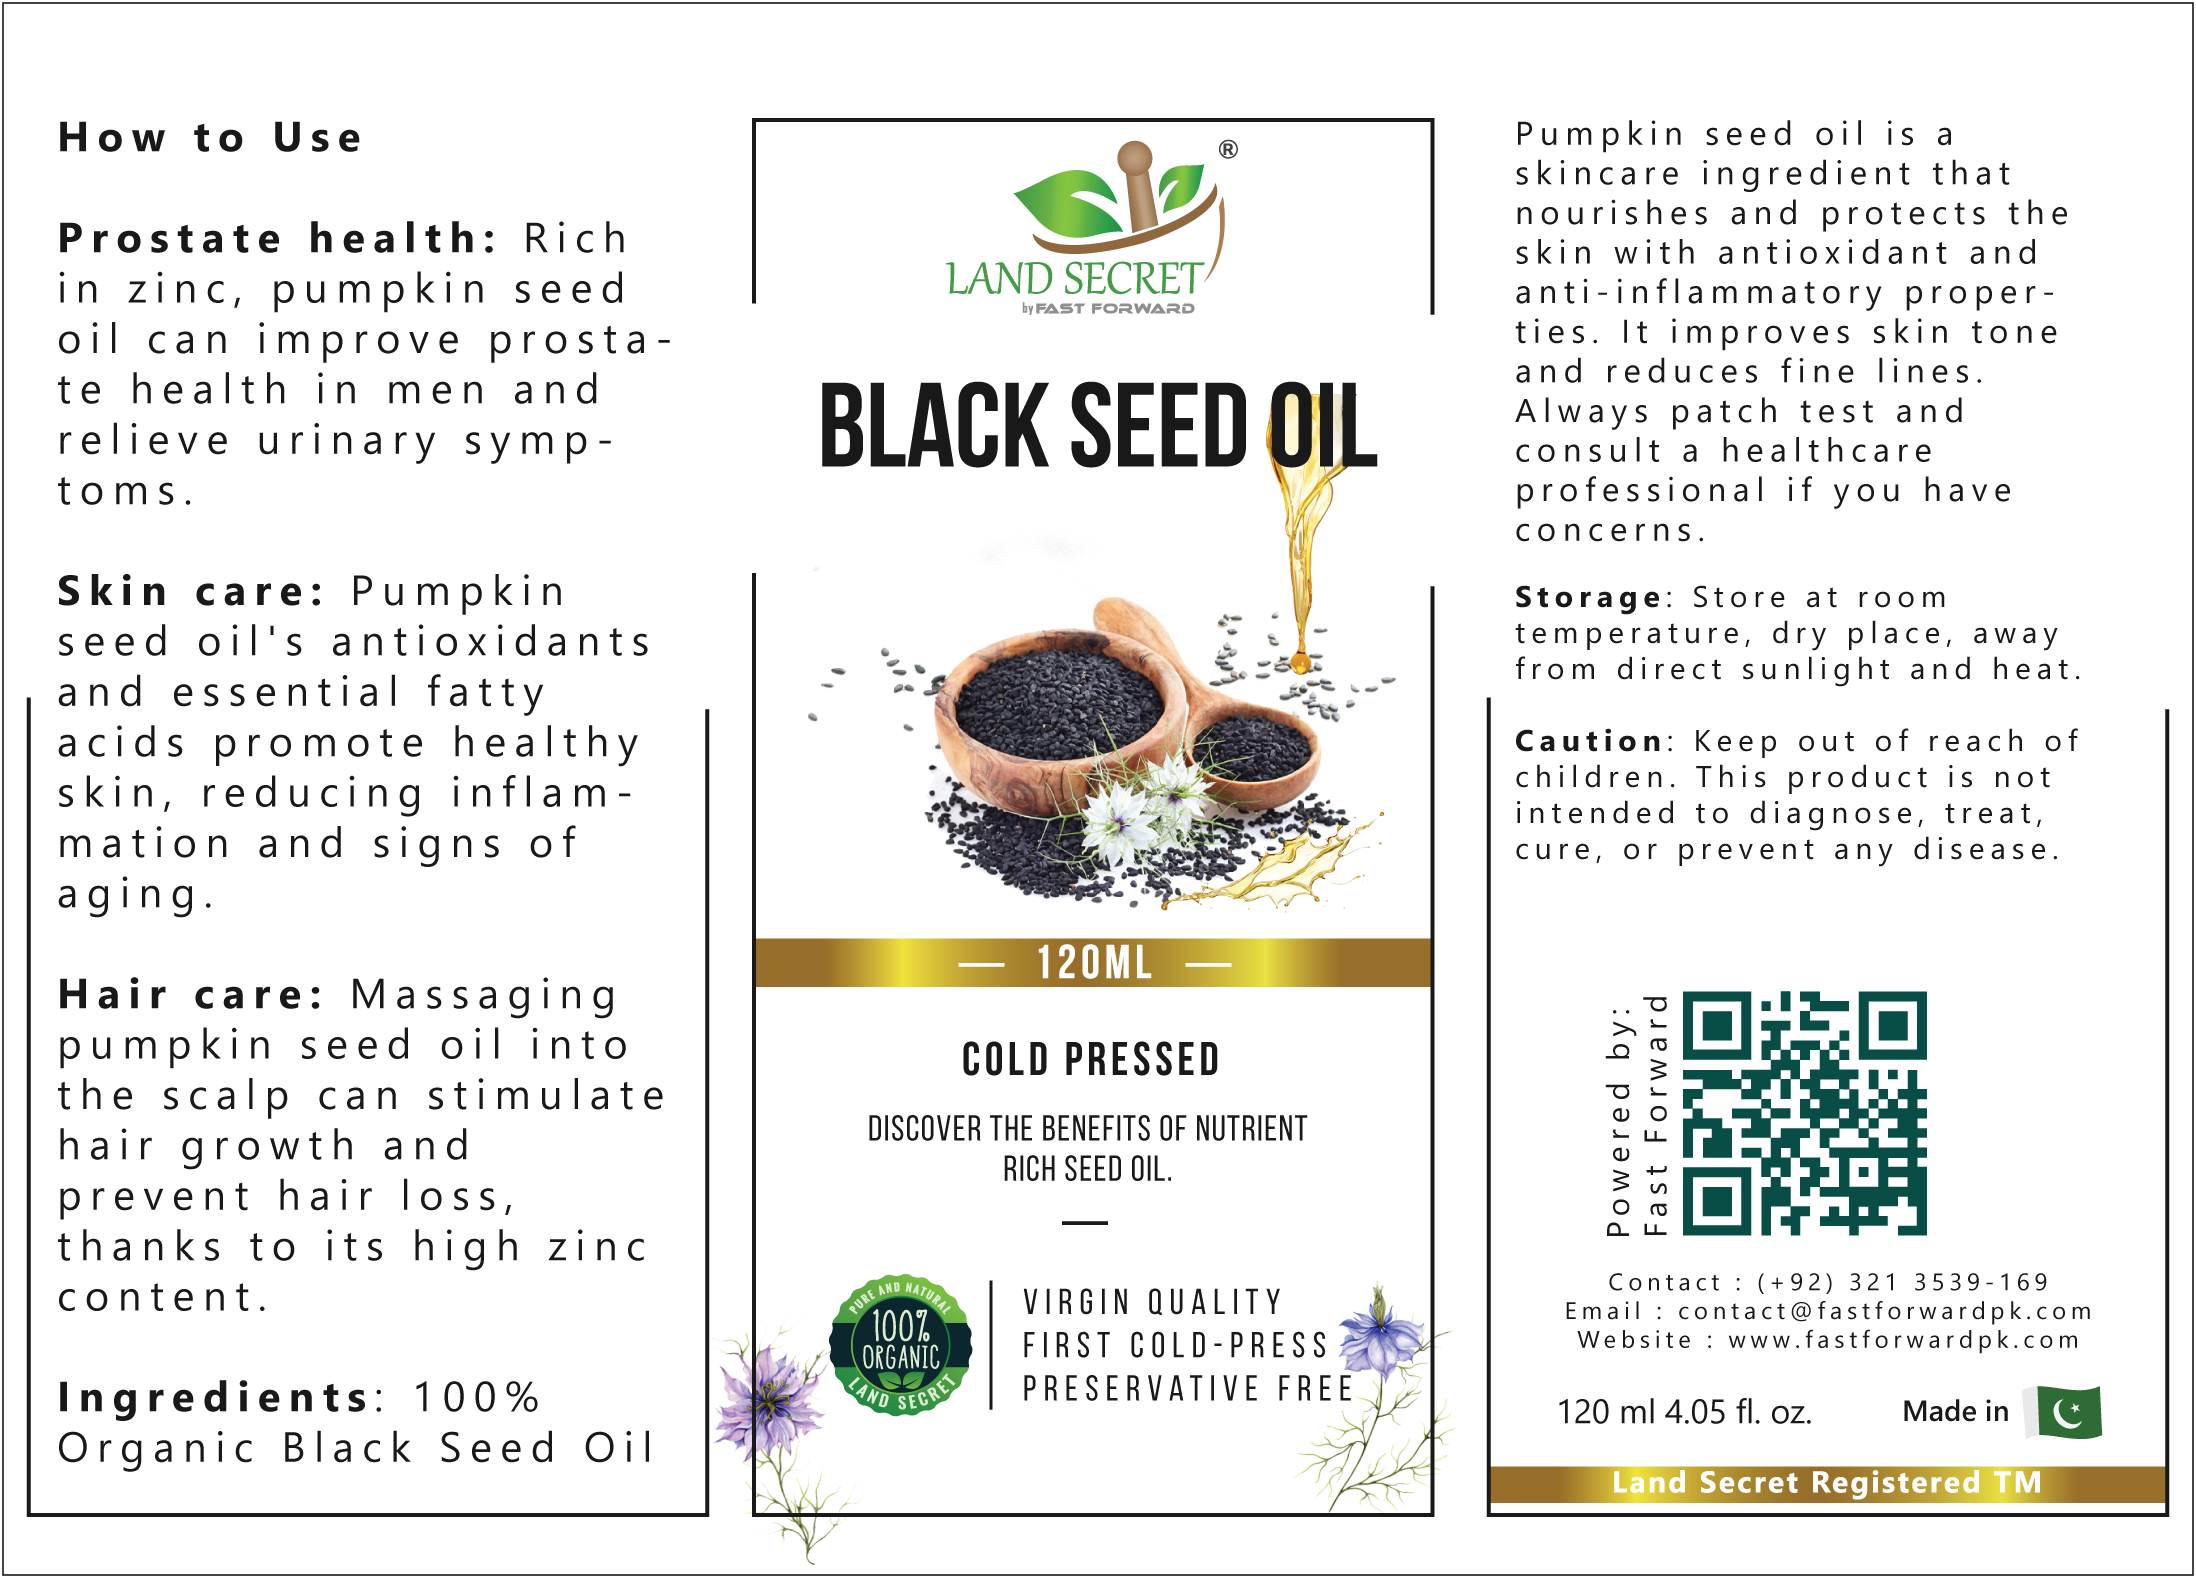 Land Secret Black Seed Oil